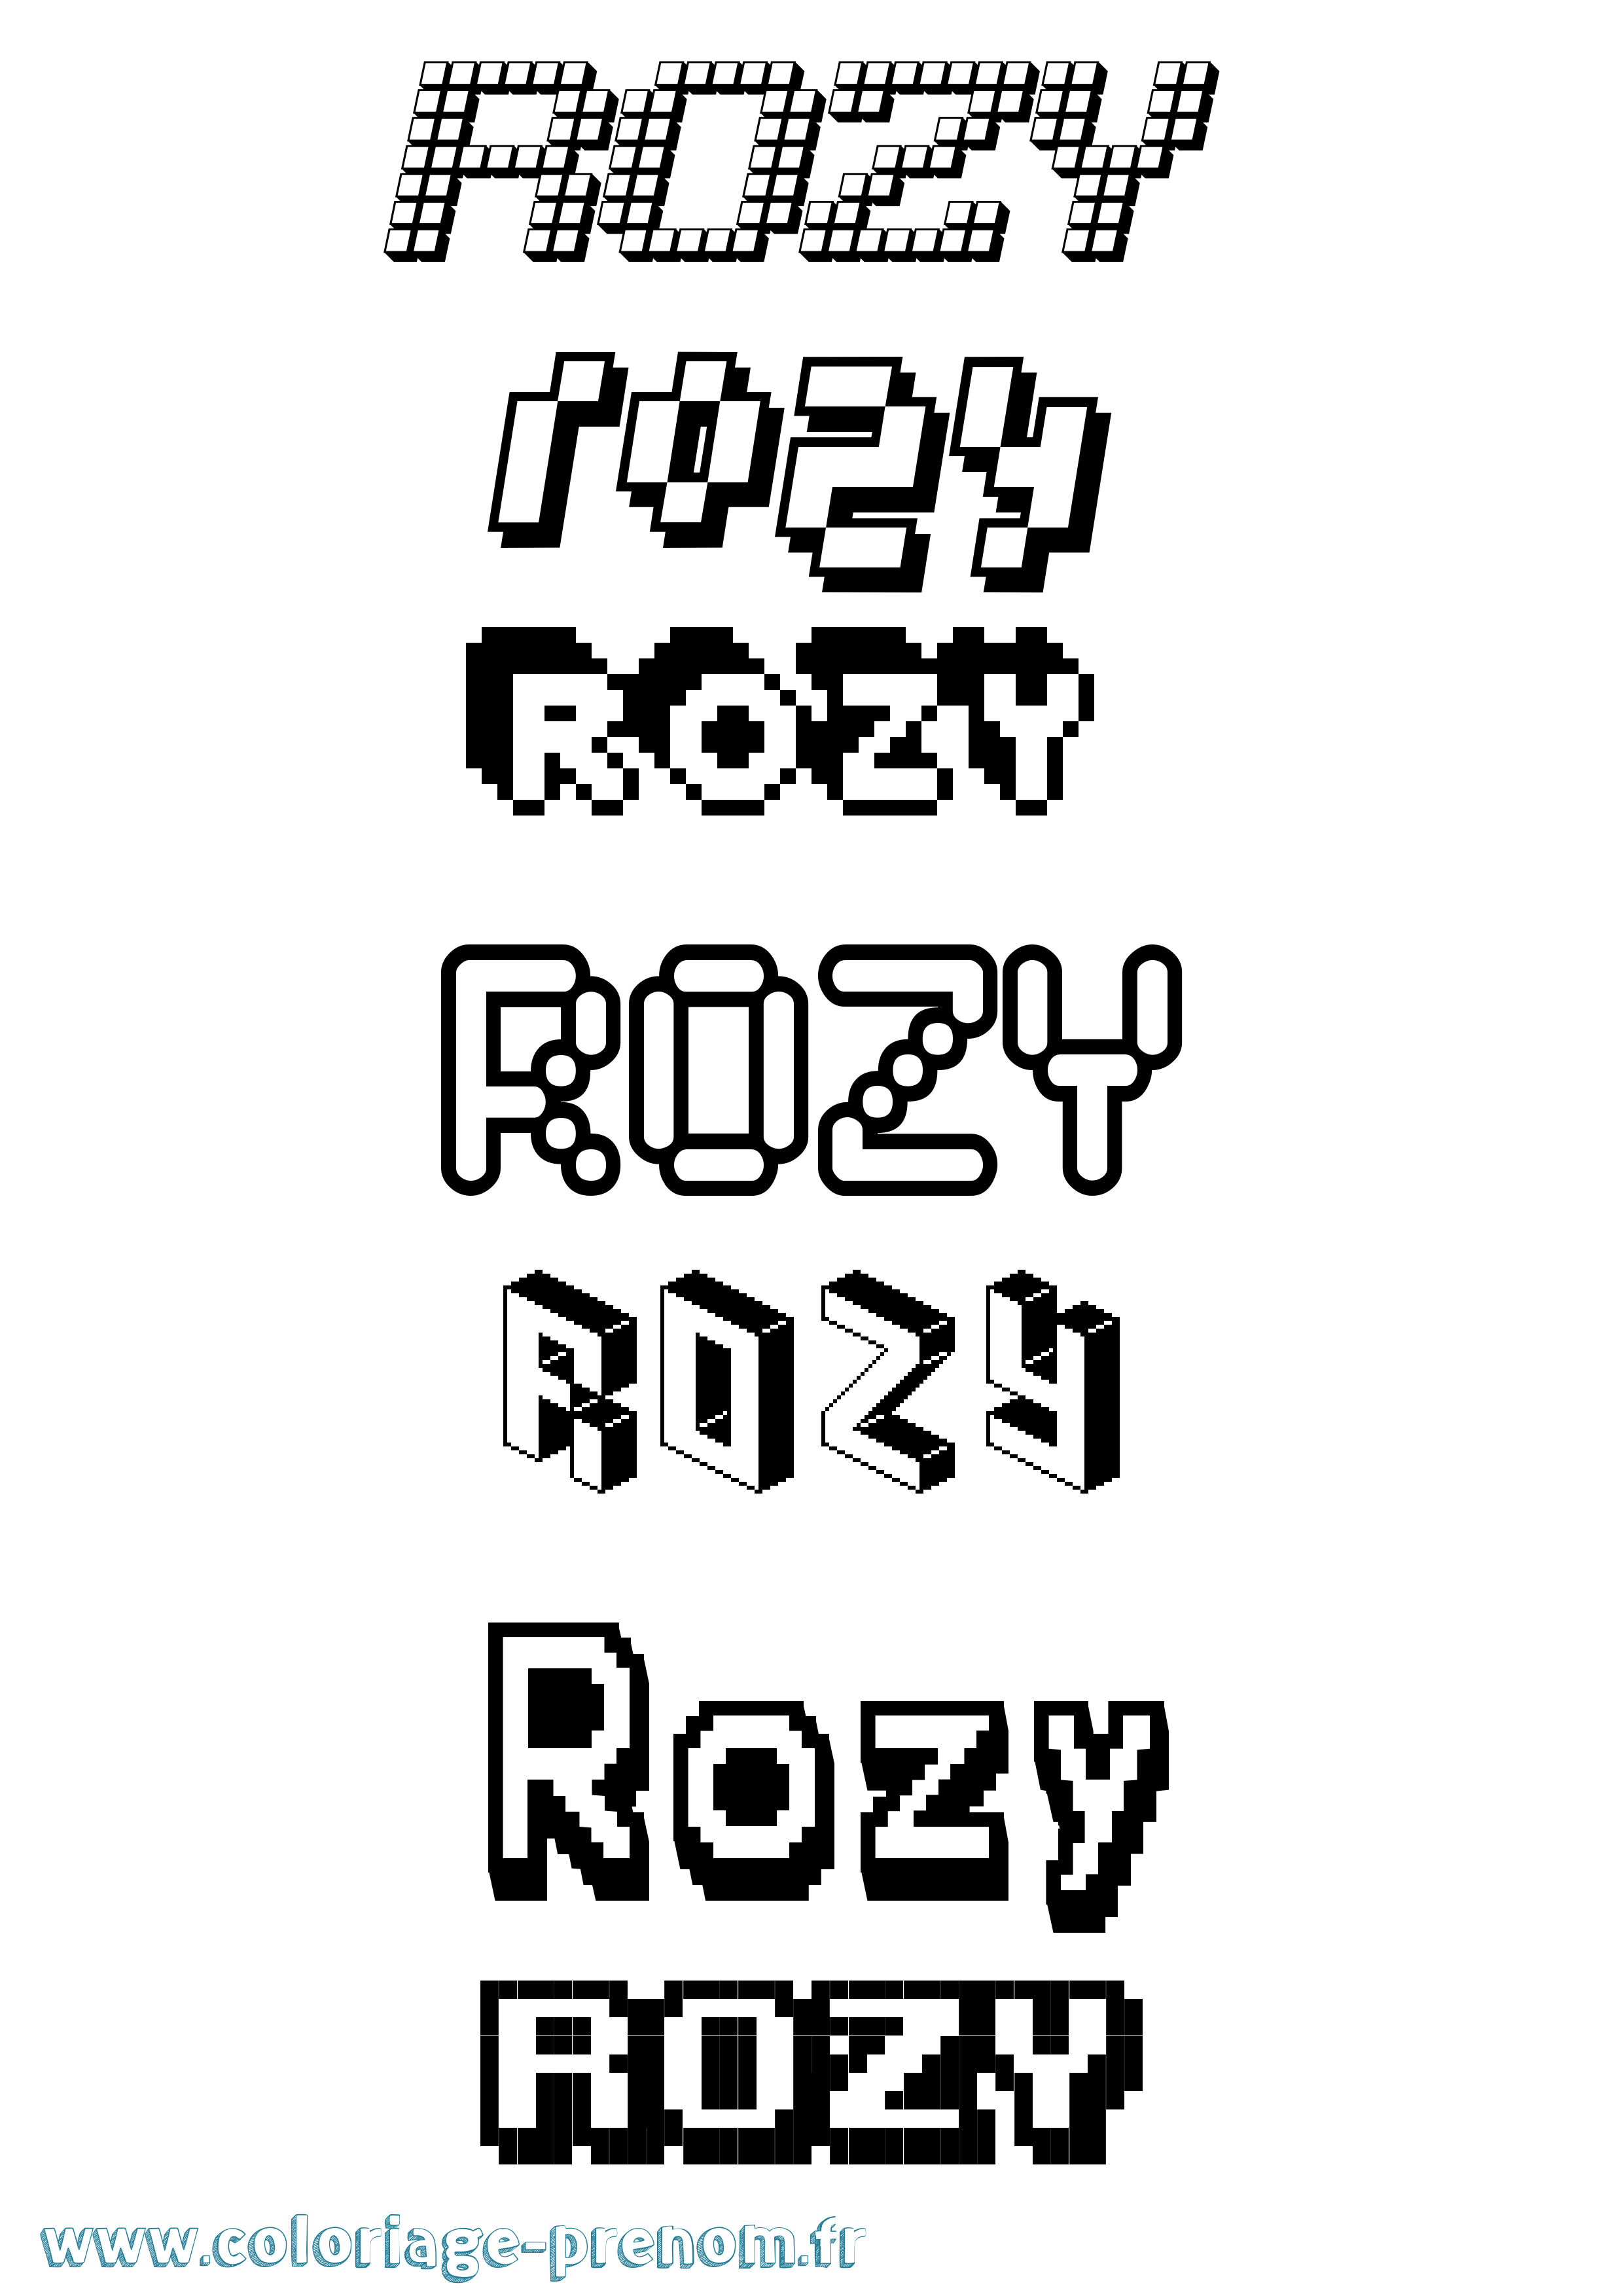 Coloriage prénom Rozy Pixel